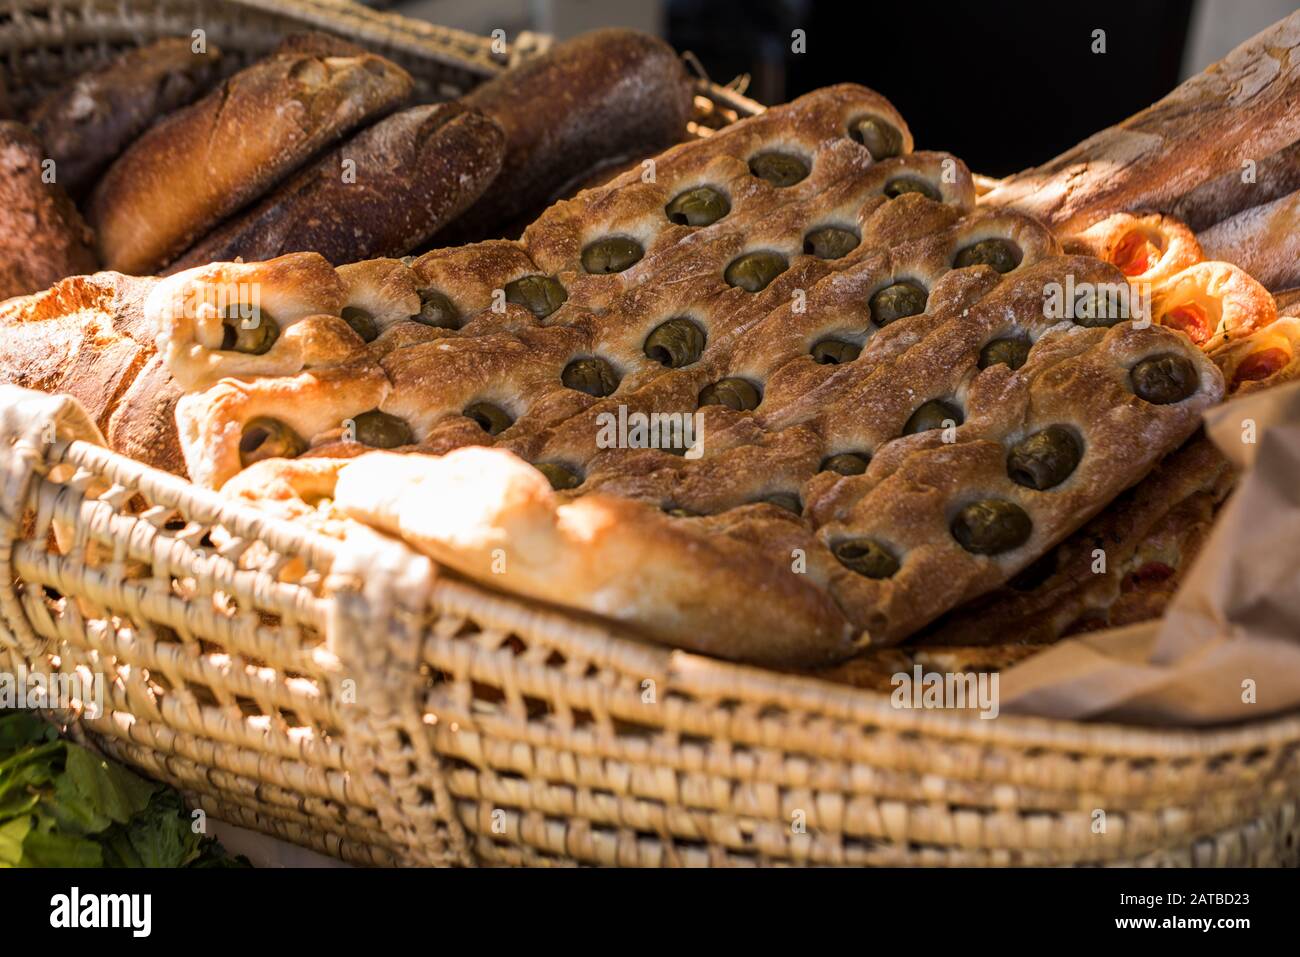 Korb mit Olivem Brot und anderen Broten Stockfoto